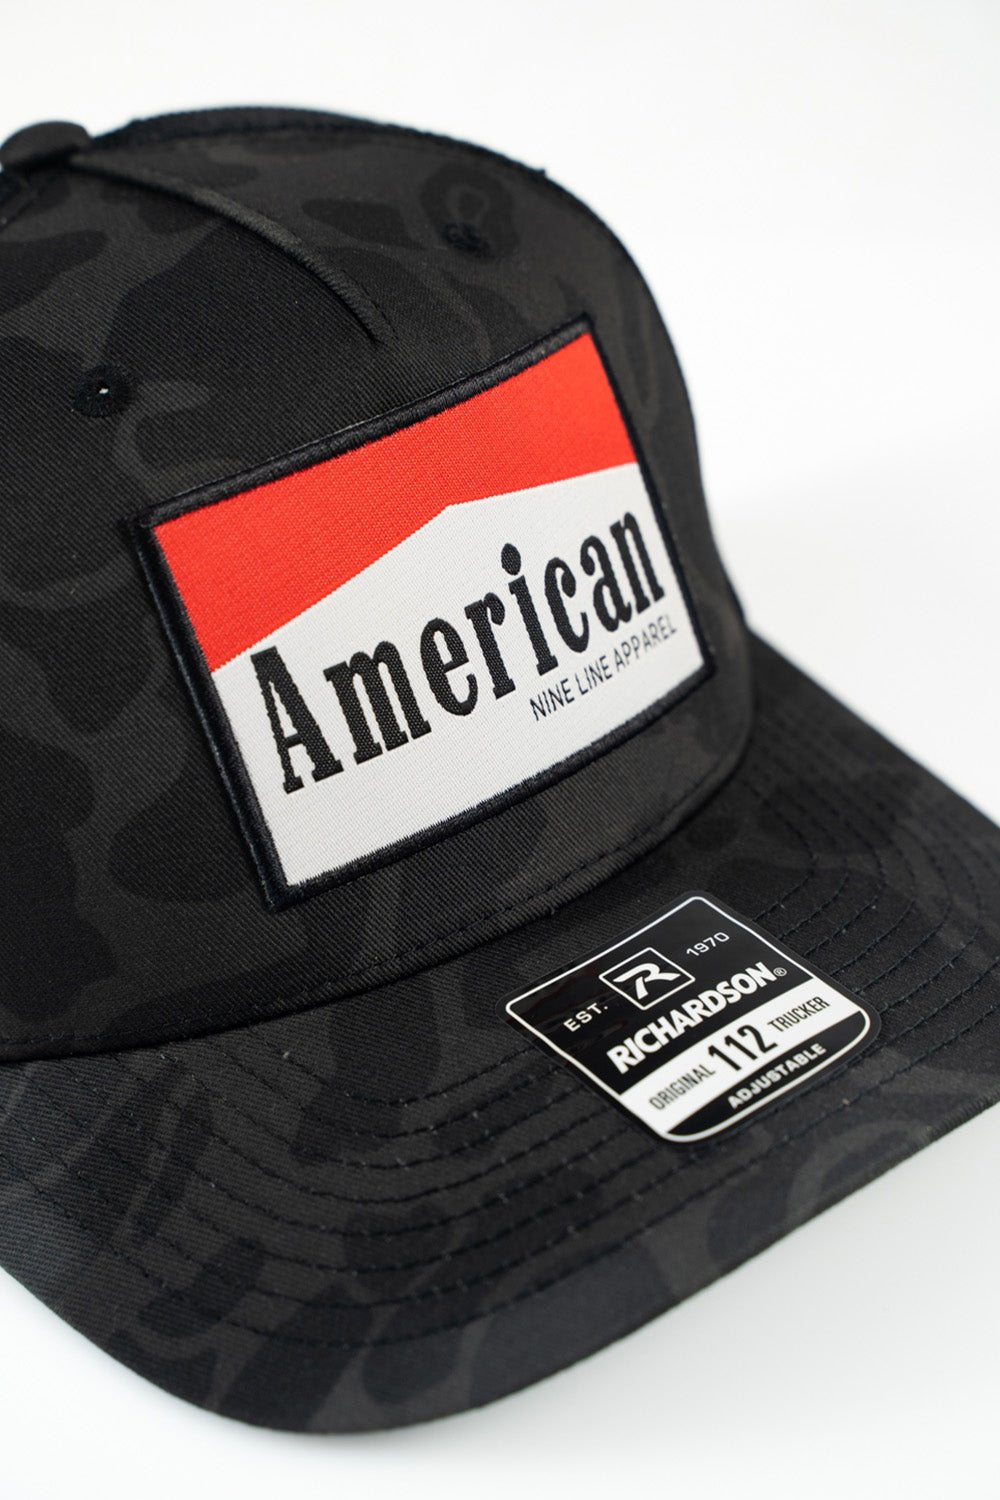 American 5 - Panel Richardson Trucker Hat